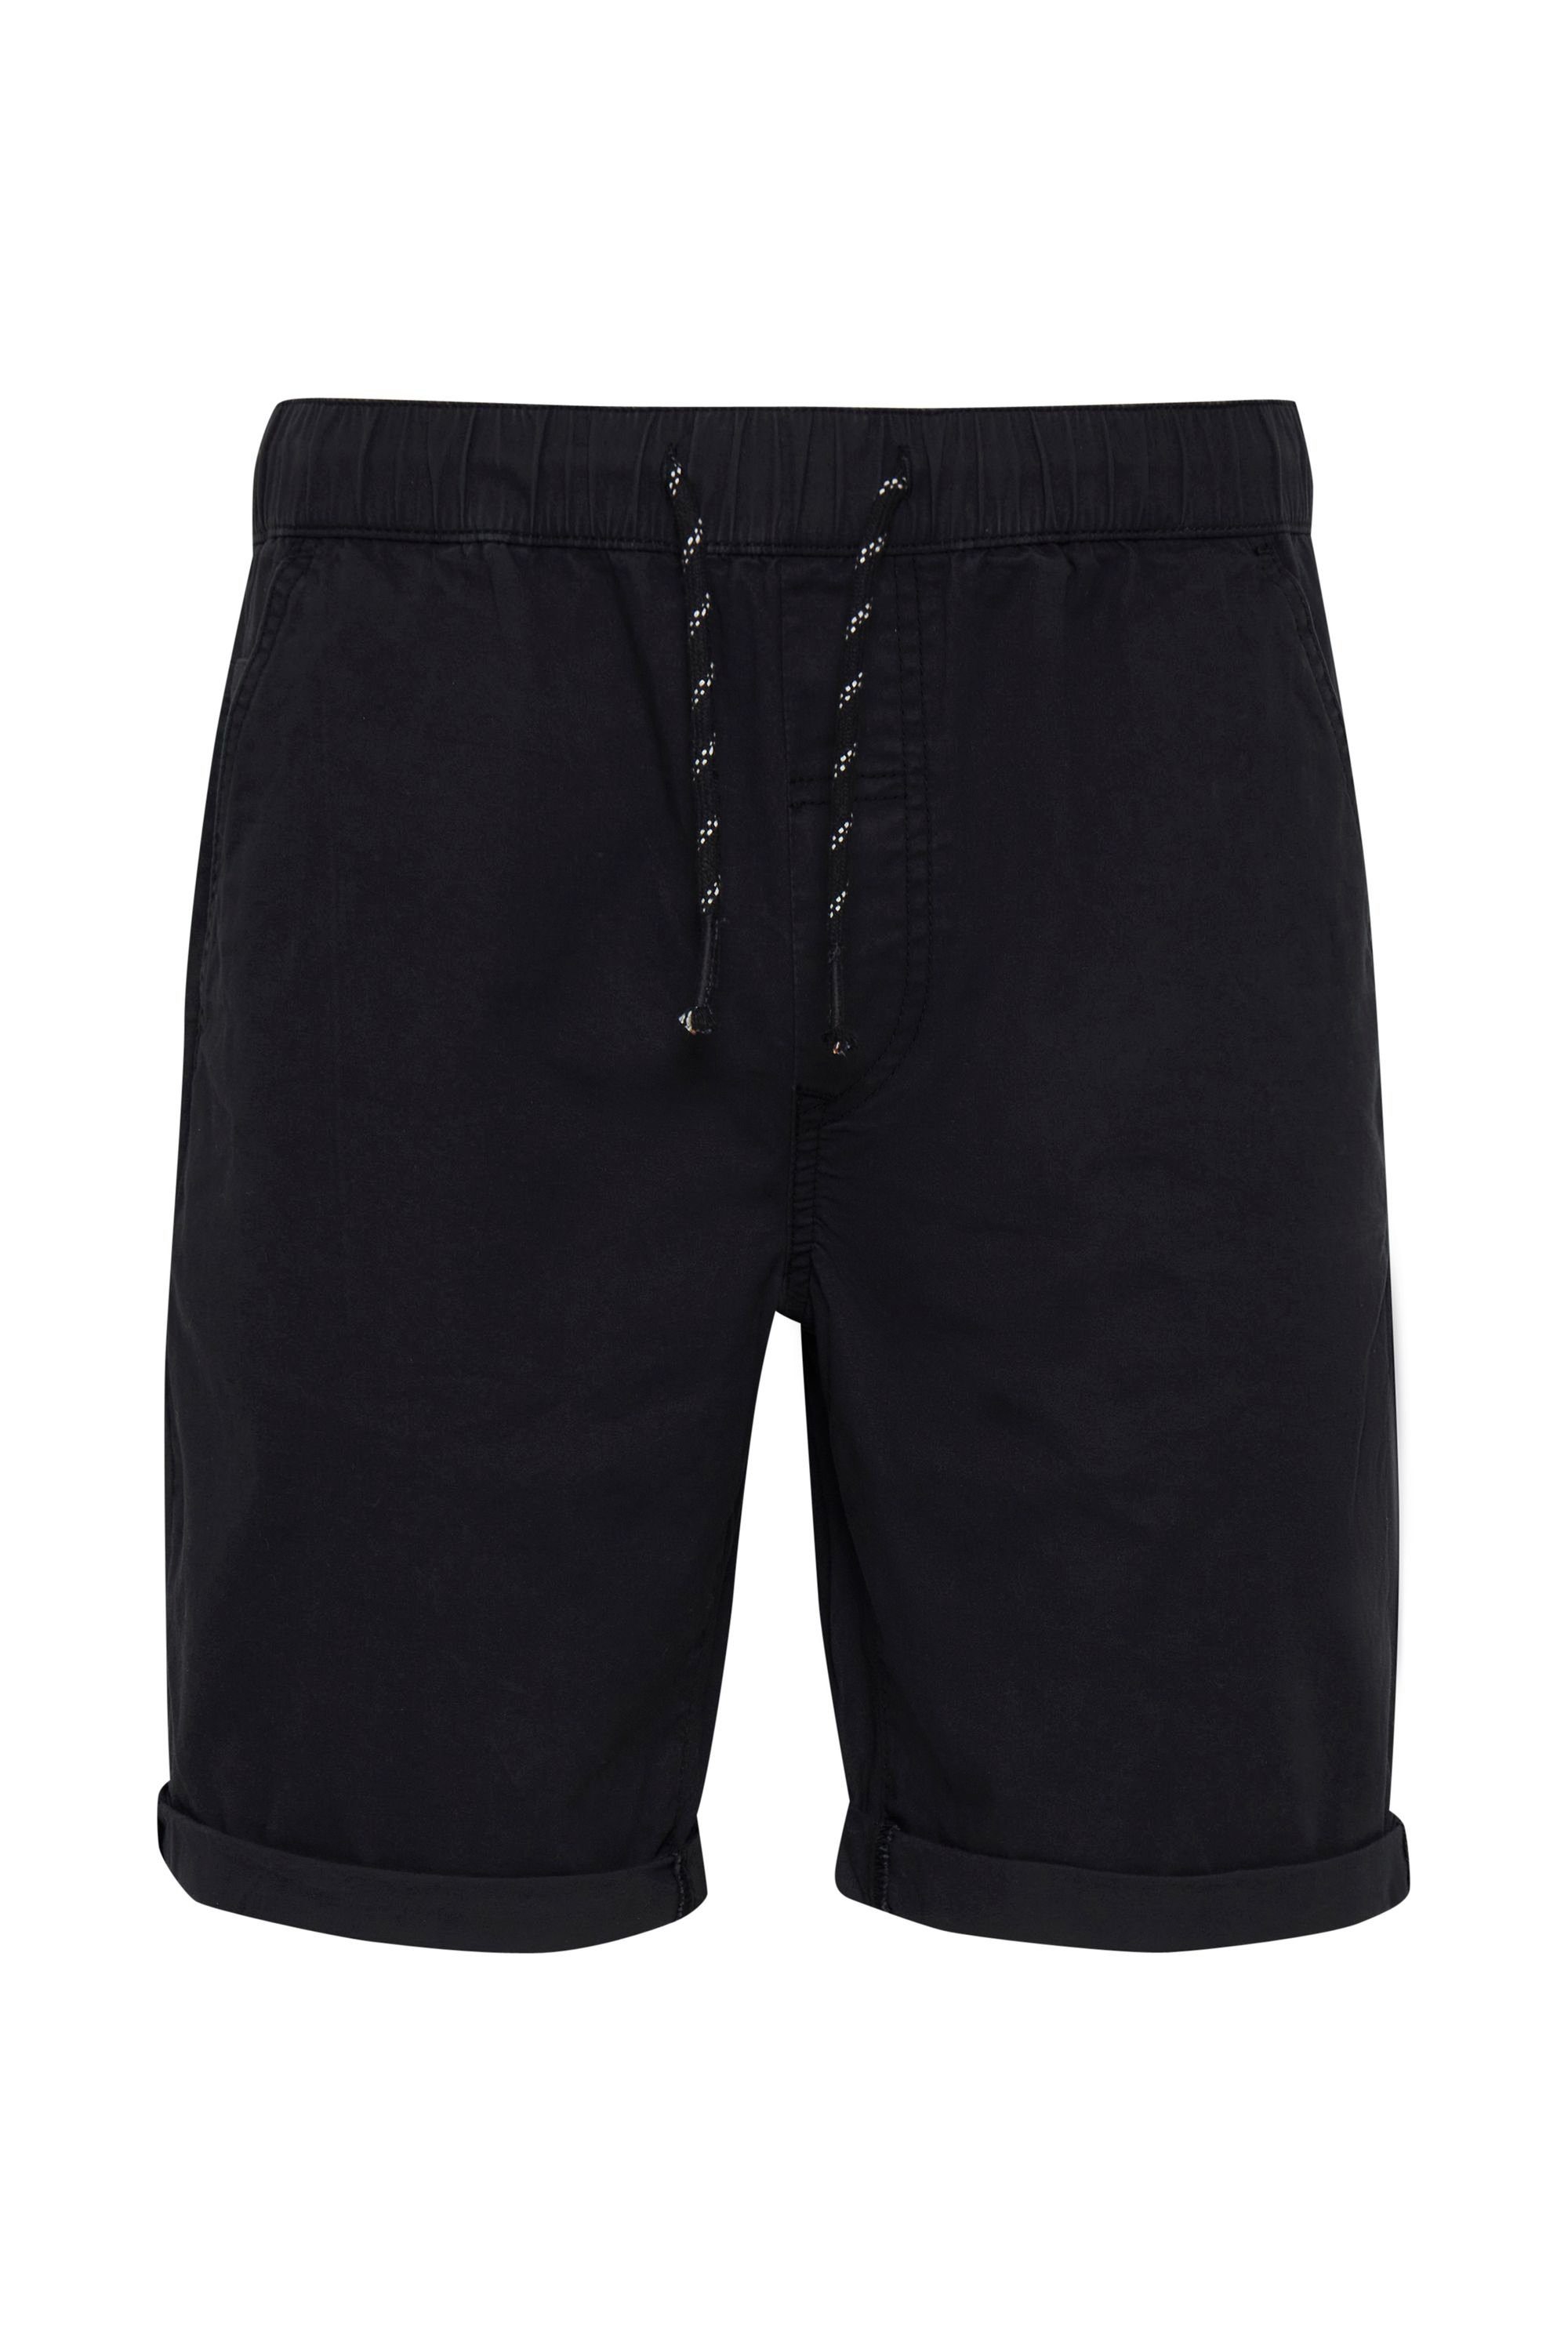 Solid Chinoshorts SDLinan Chino elastischem Black Shorts mit Bund (194007)